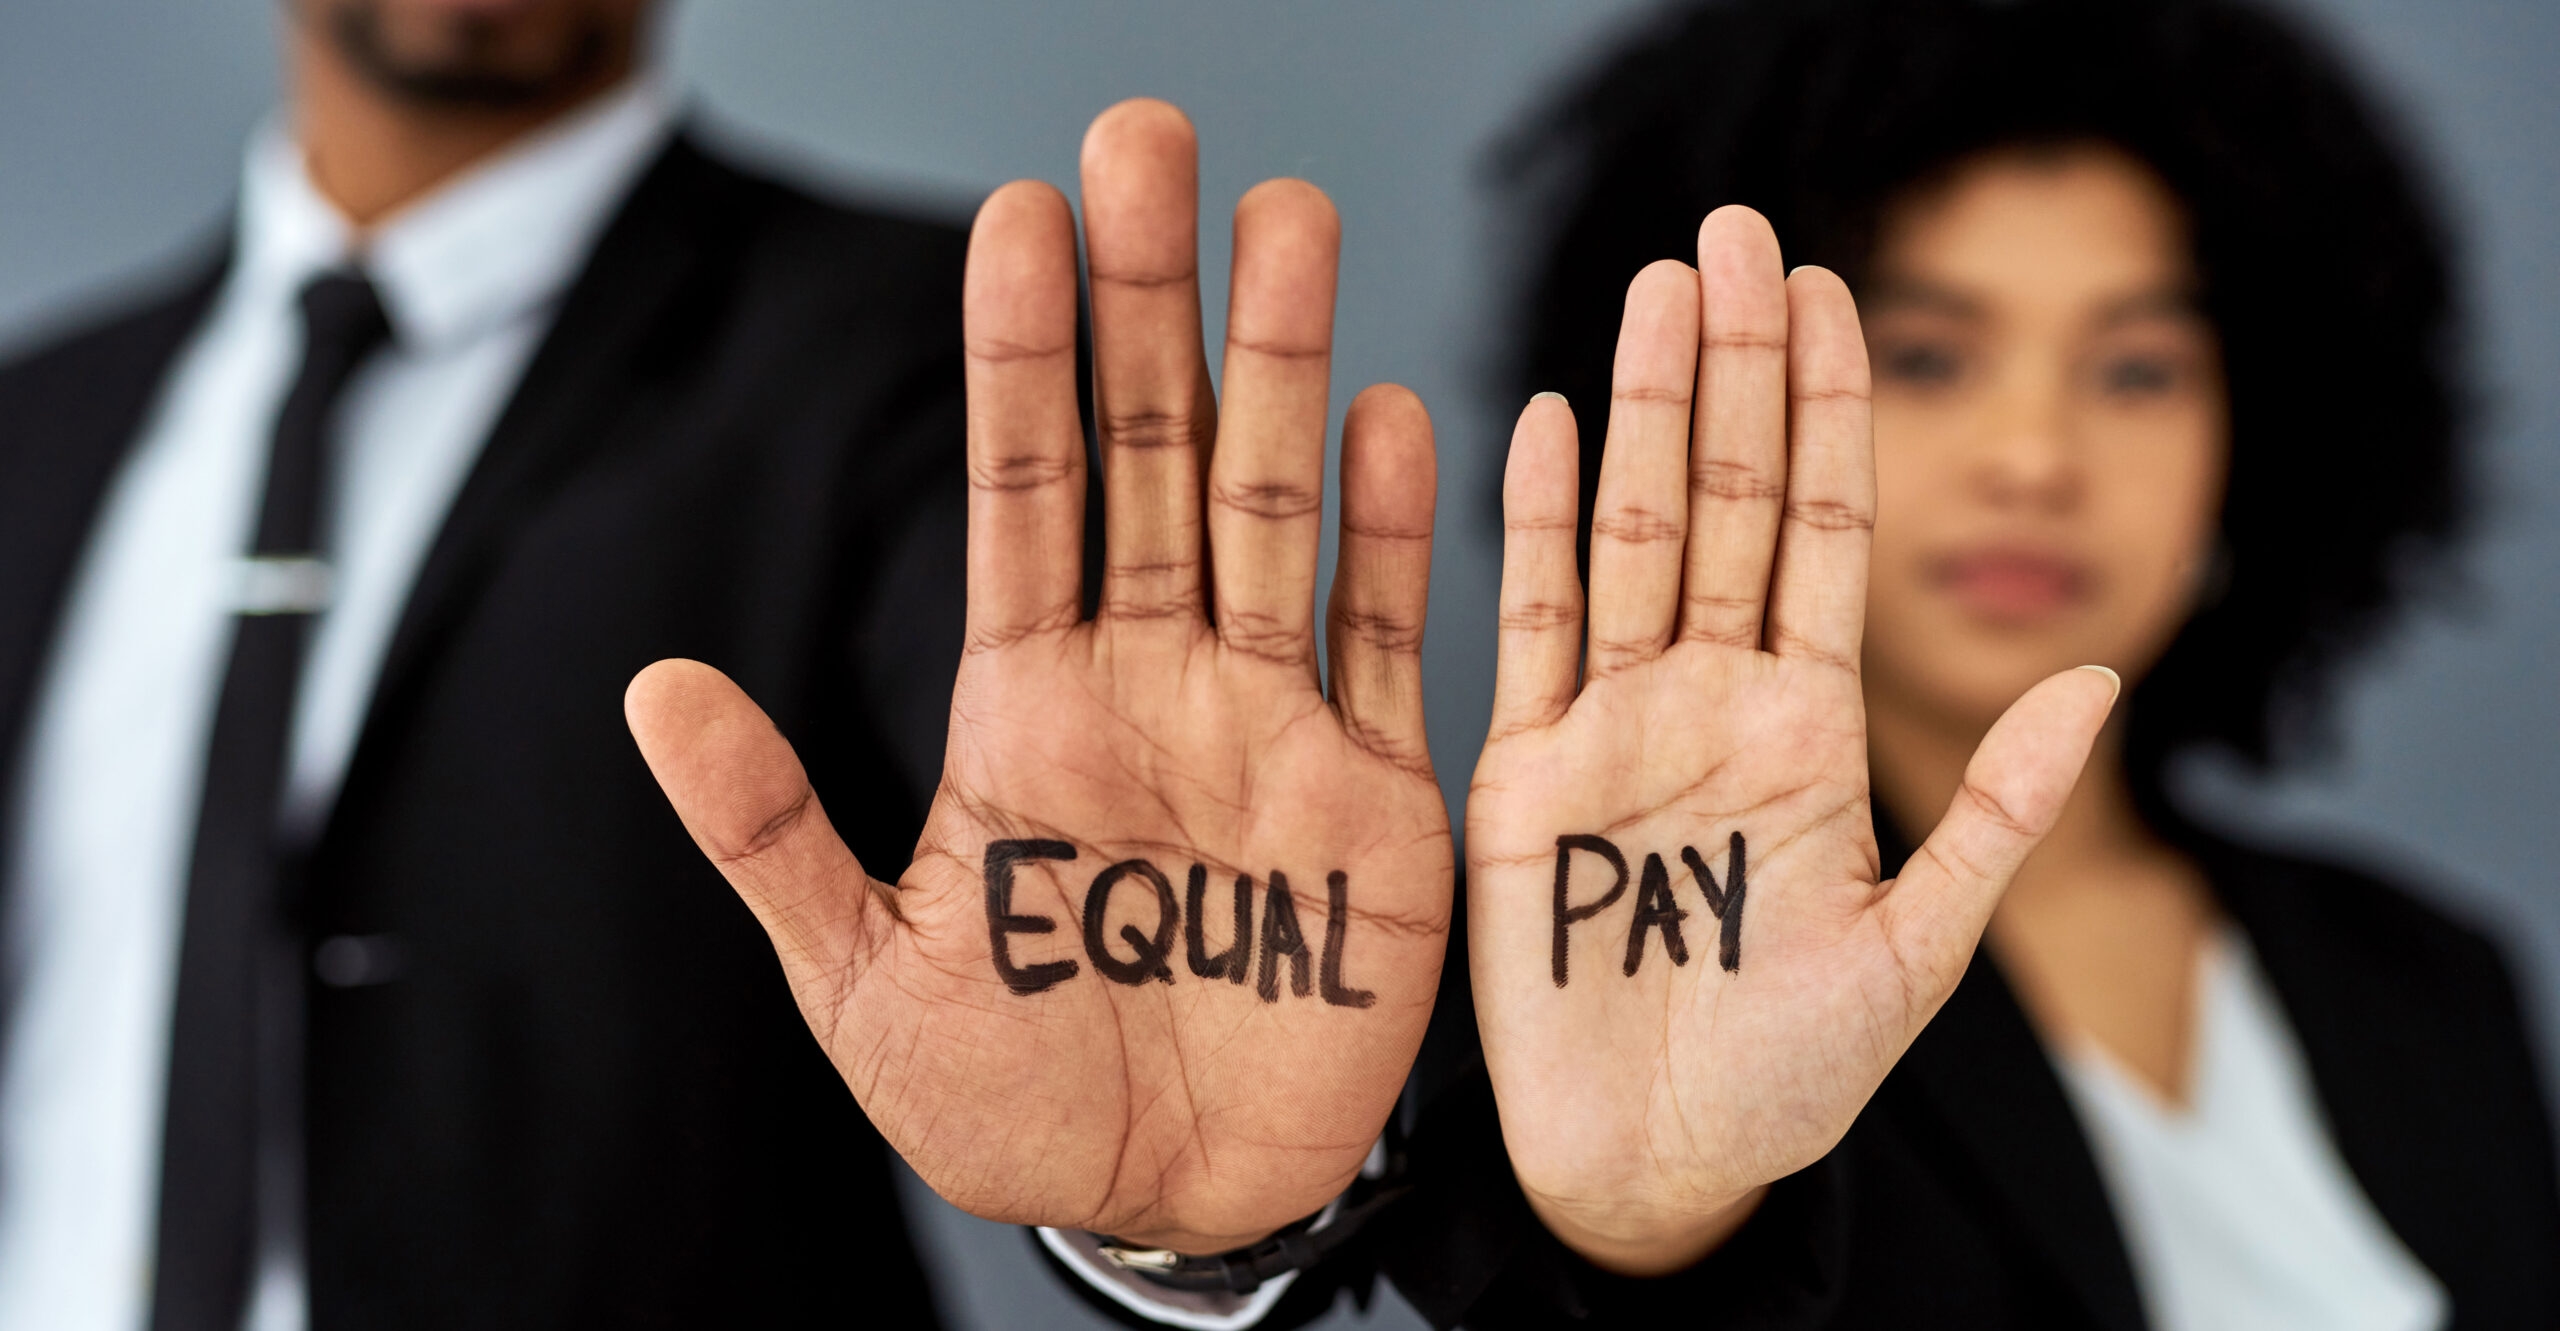 Making Sense of the Male-Female 'Wage Gap'